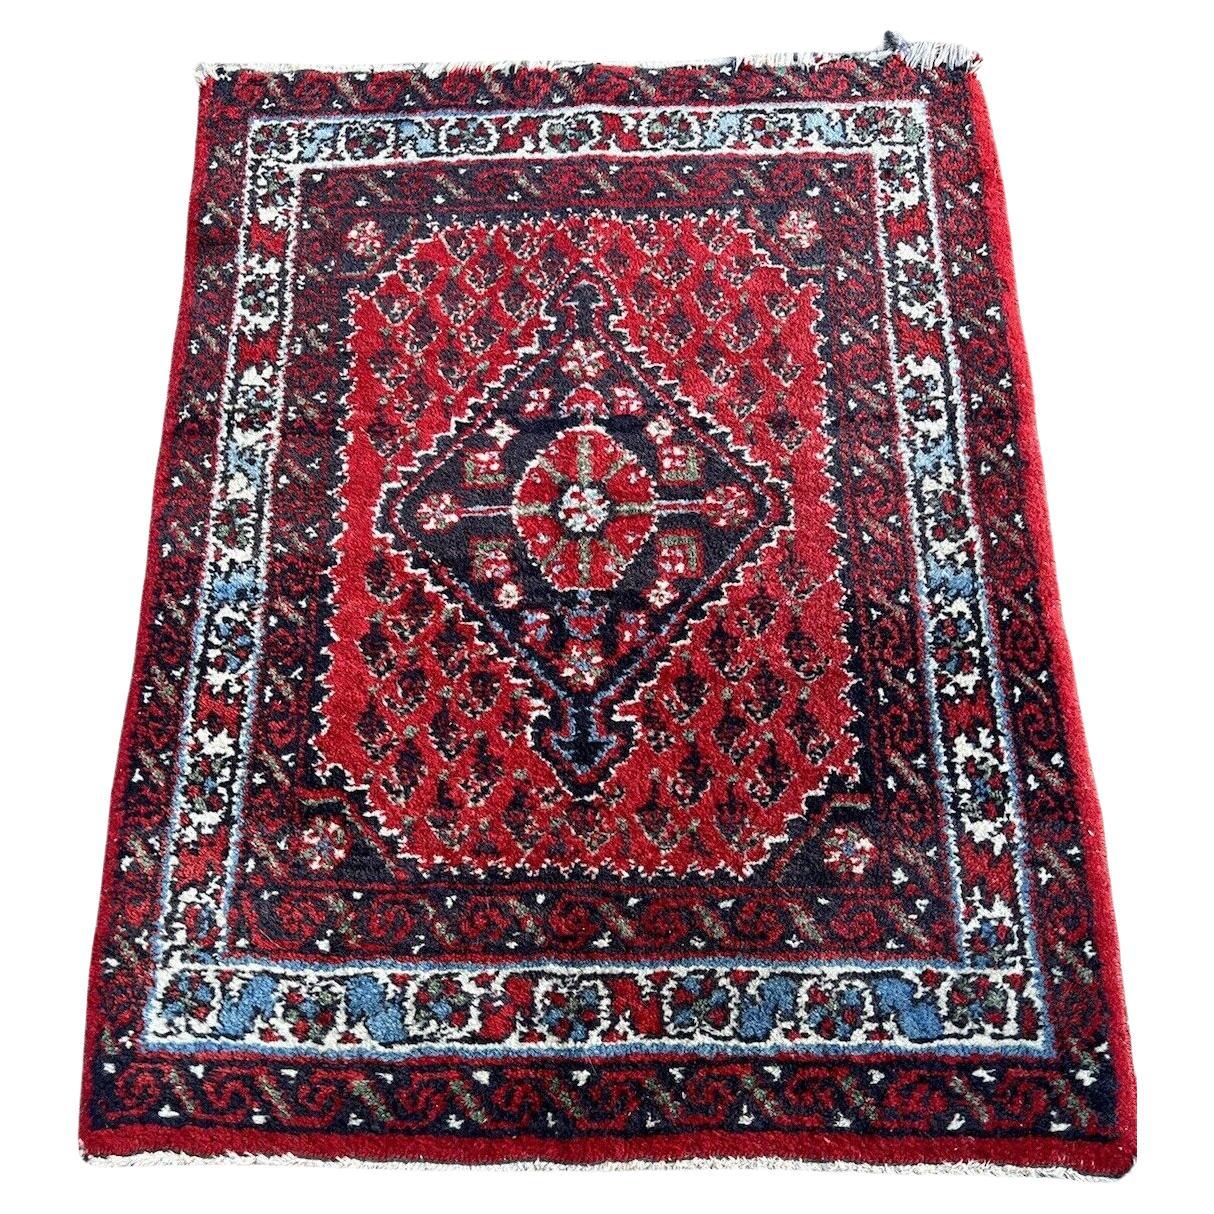 Handmade Vintage Persian Style Hamadan Rug 2.1' x 2.9', 1970s - 1S35 For Sale